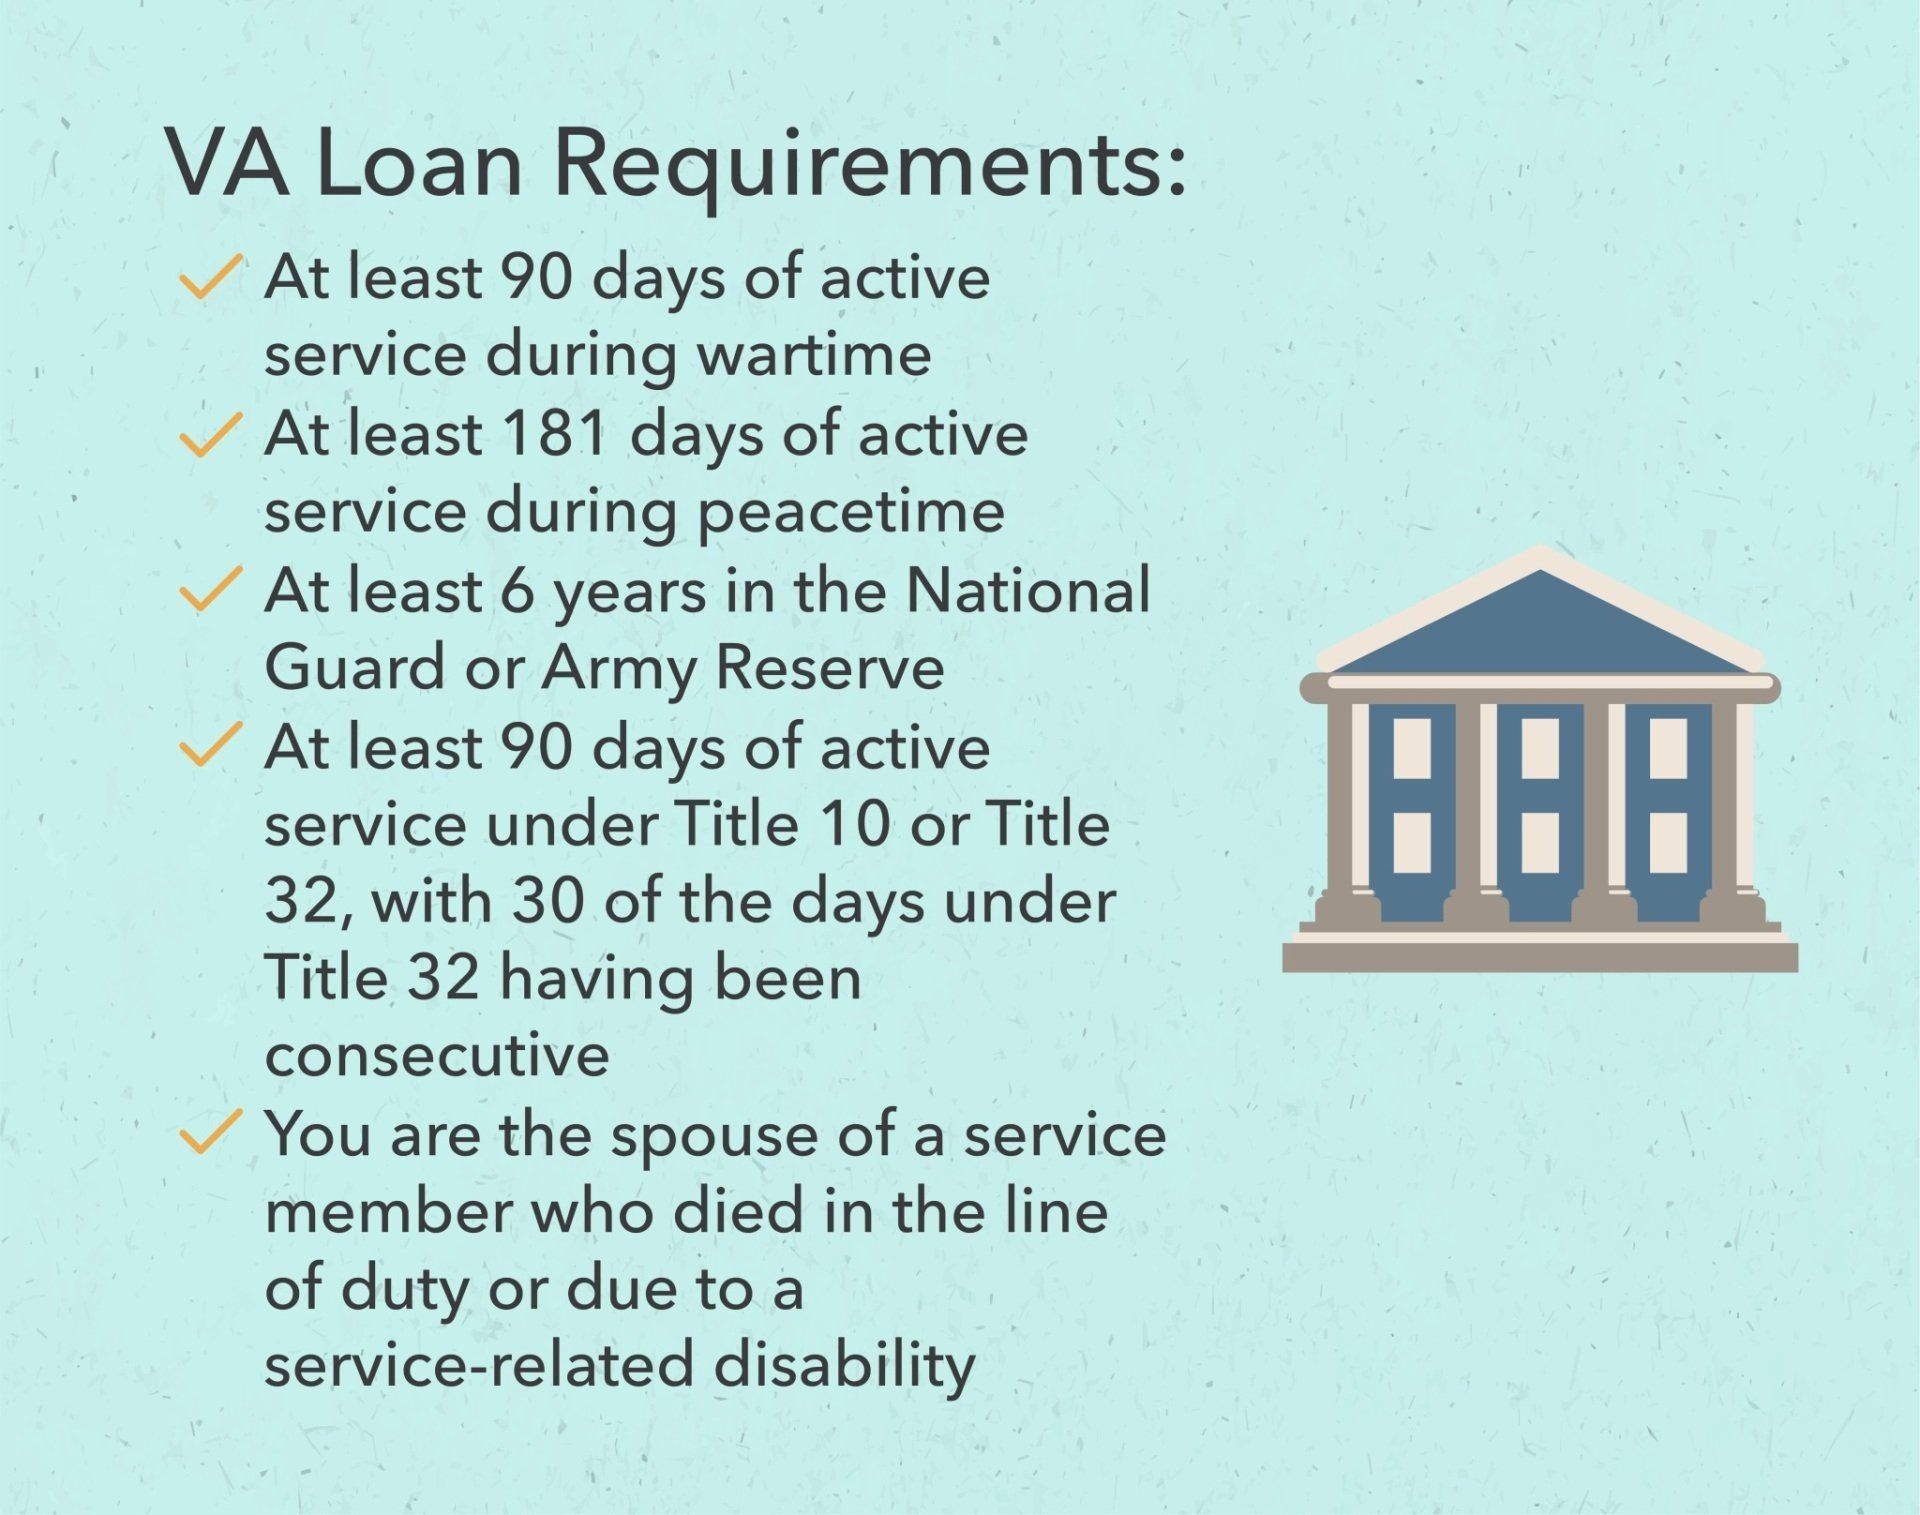 va loan requirements image